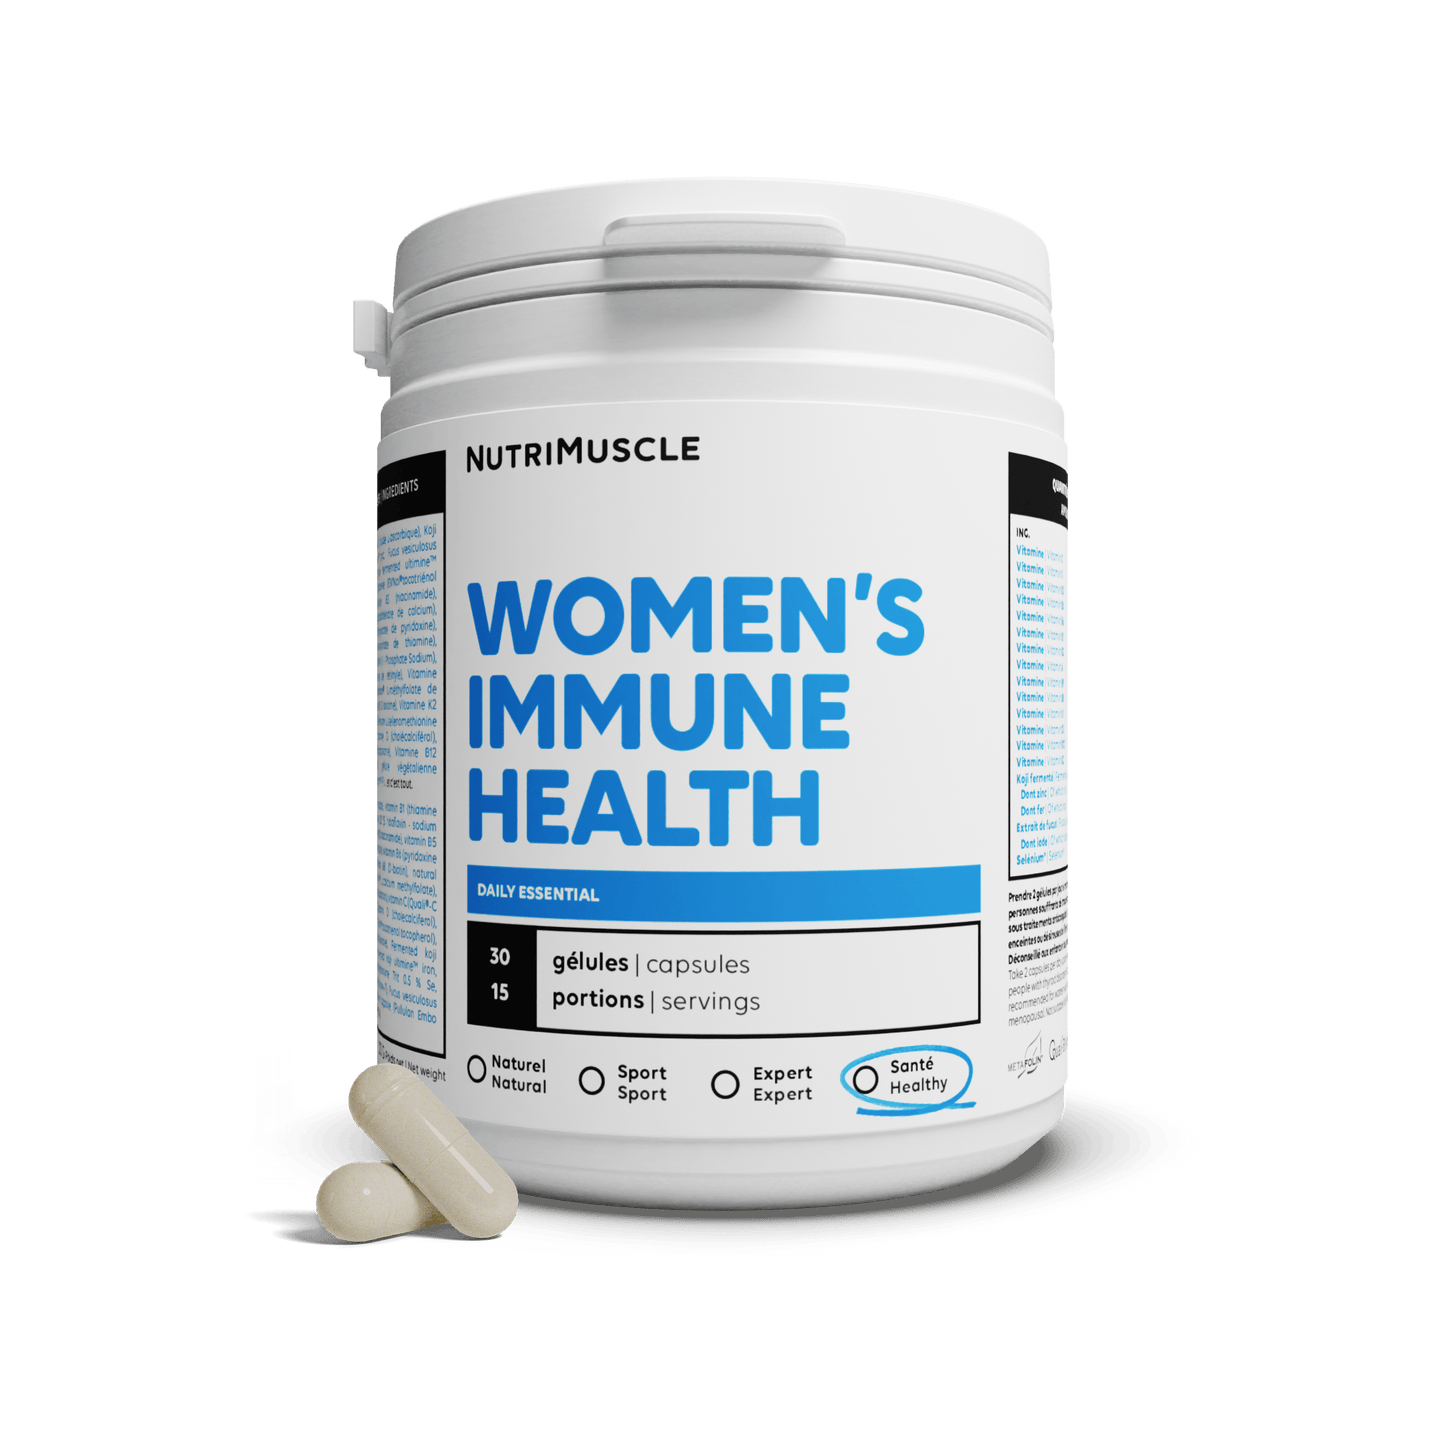 Nutrimuscle Vitamines 30 gélules Women's Immune Health